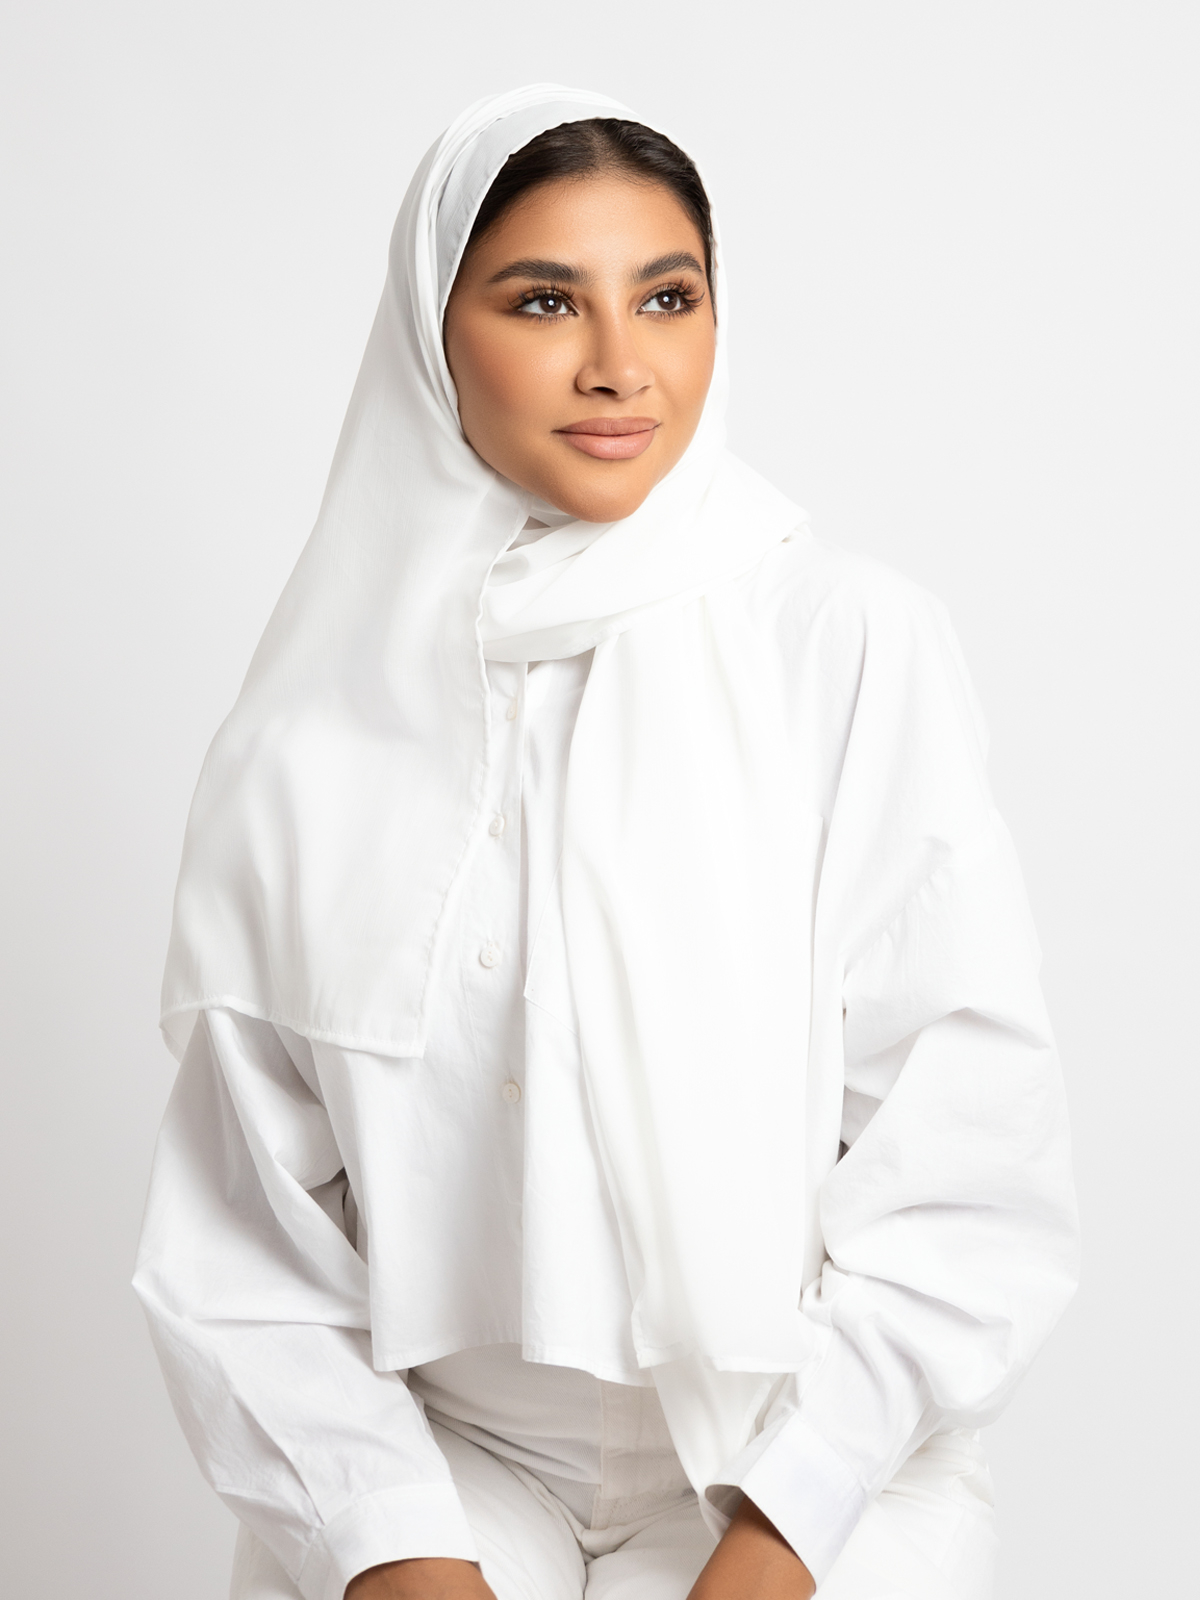 Luxurious chiffon hijab plain tarha 200 cm long white color high quality material online in ksa by kaafmeem